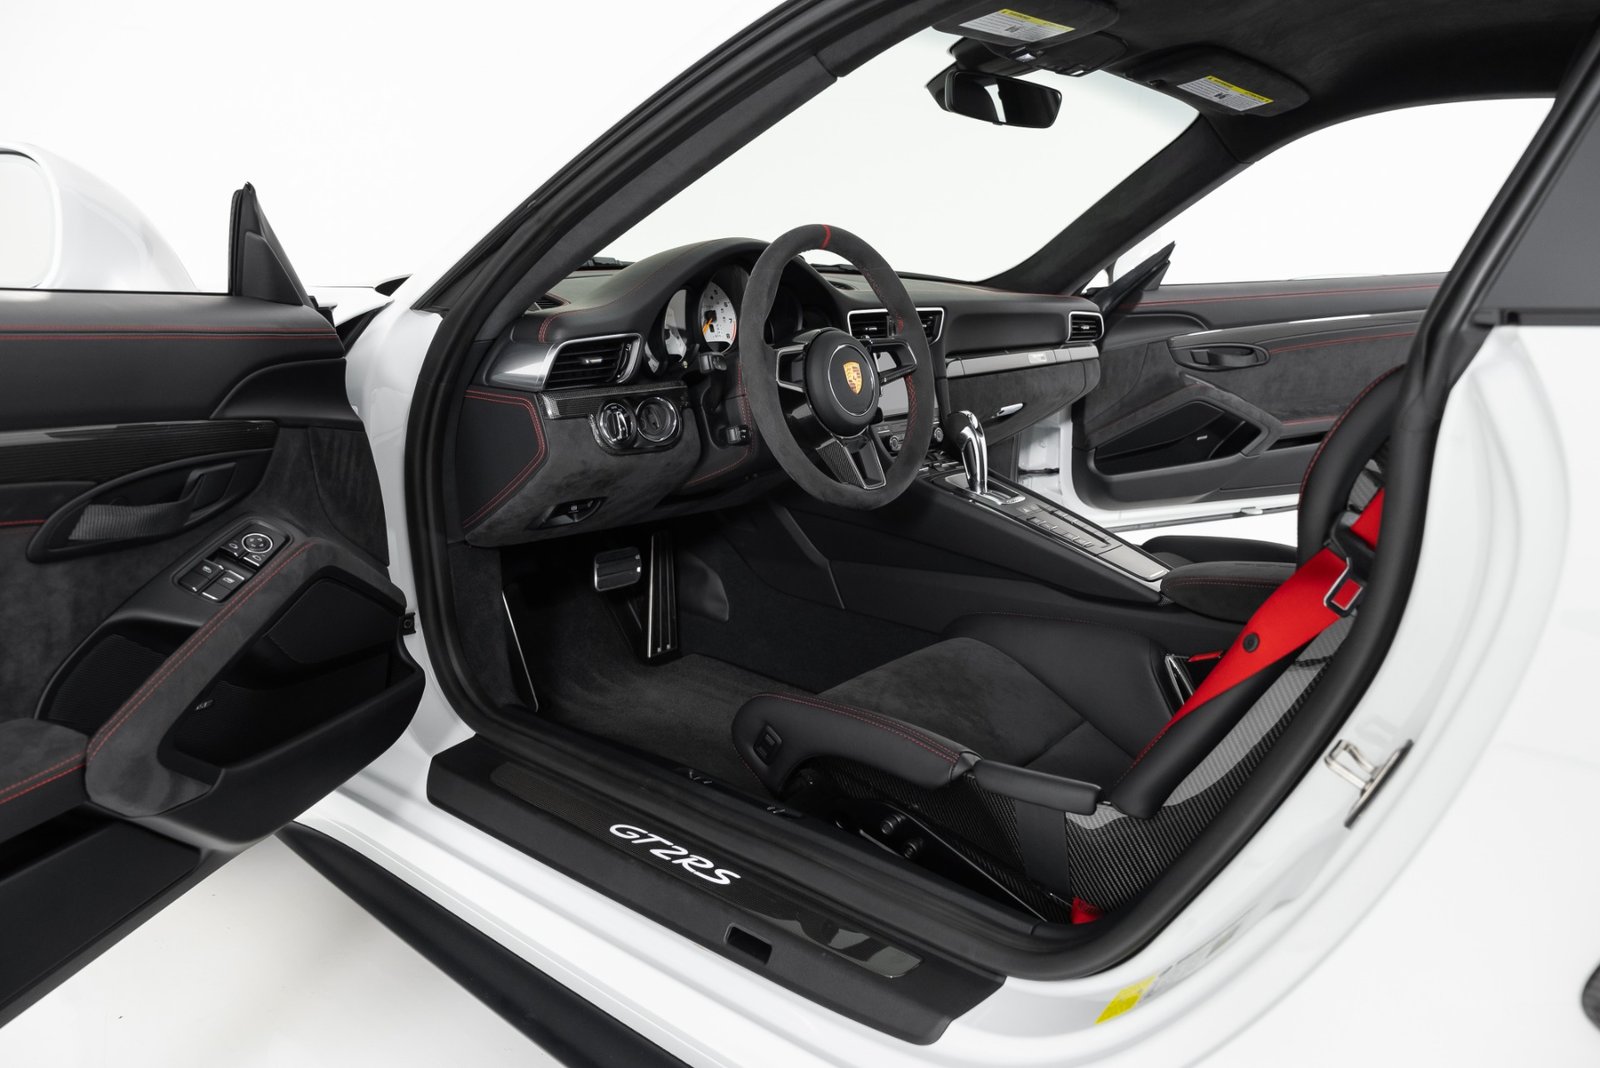 New 2018 PORSCHE 911 GT2 RS WEISSACH – MAG WHEELS (5)